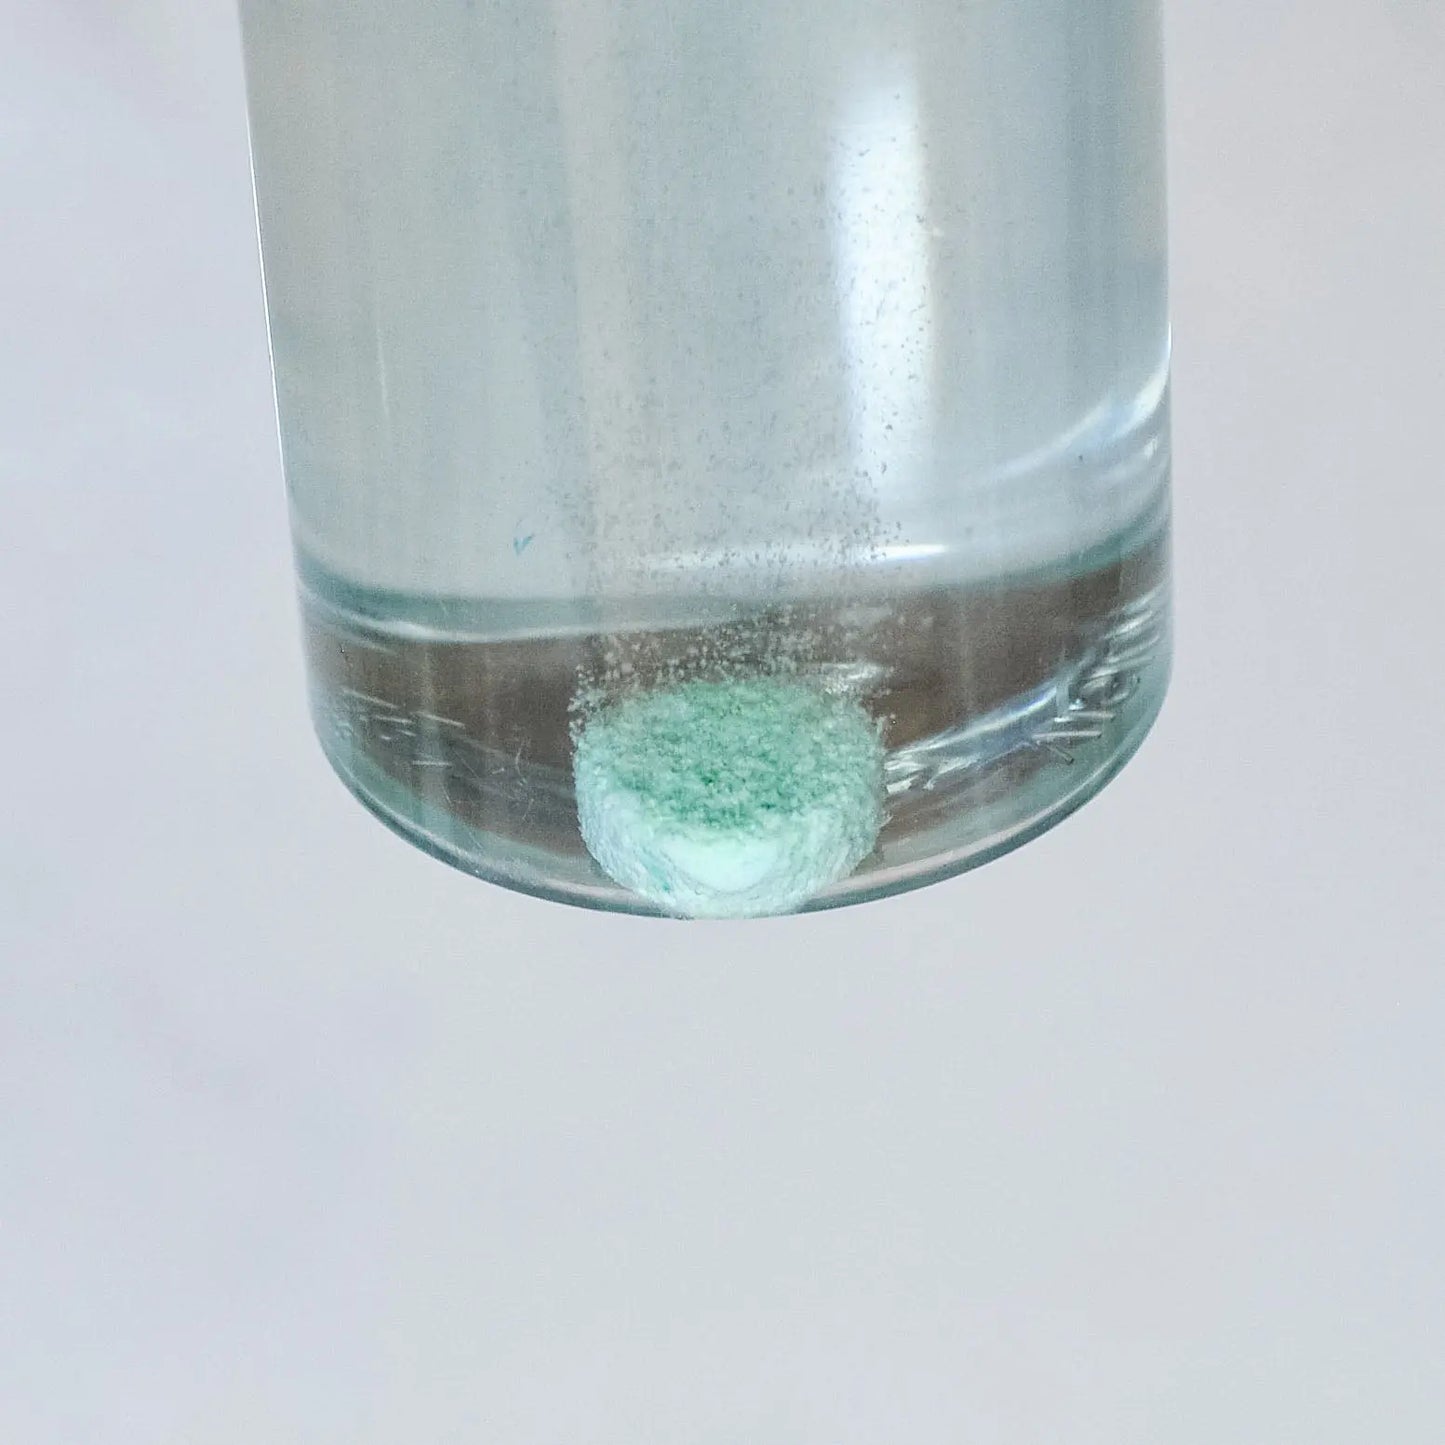 99.9% Antibacterial Multipurpose Cleaner Tablet dissolving in tap water